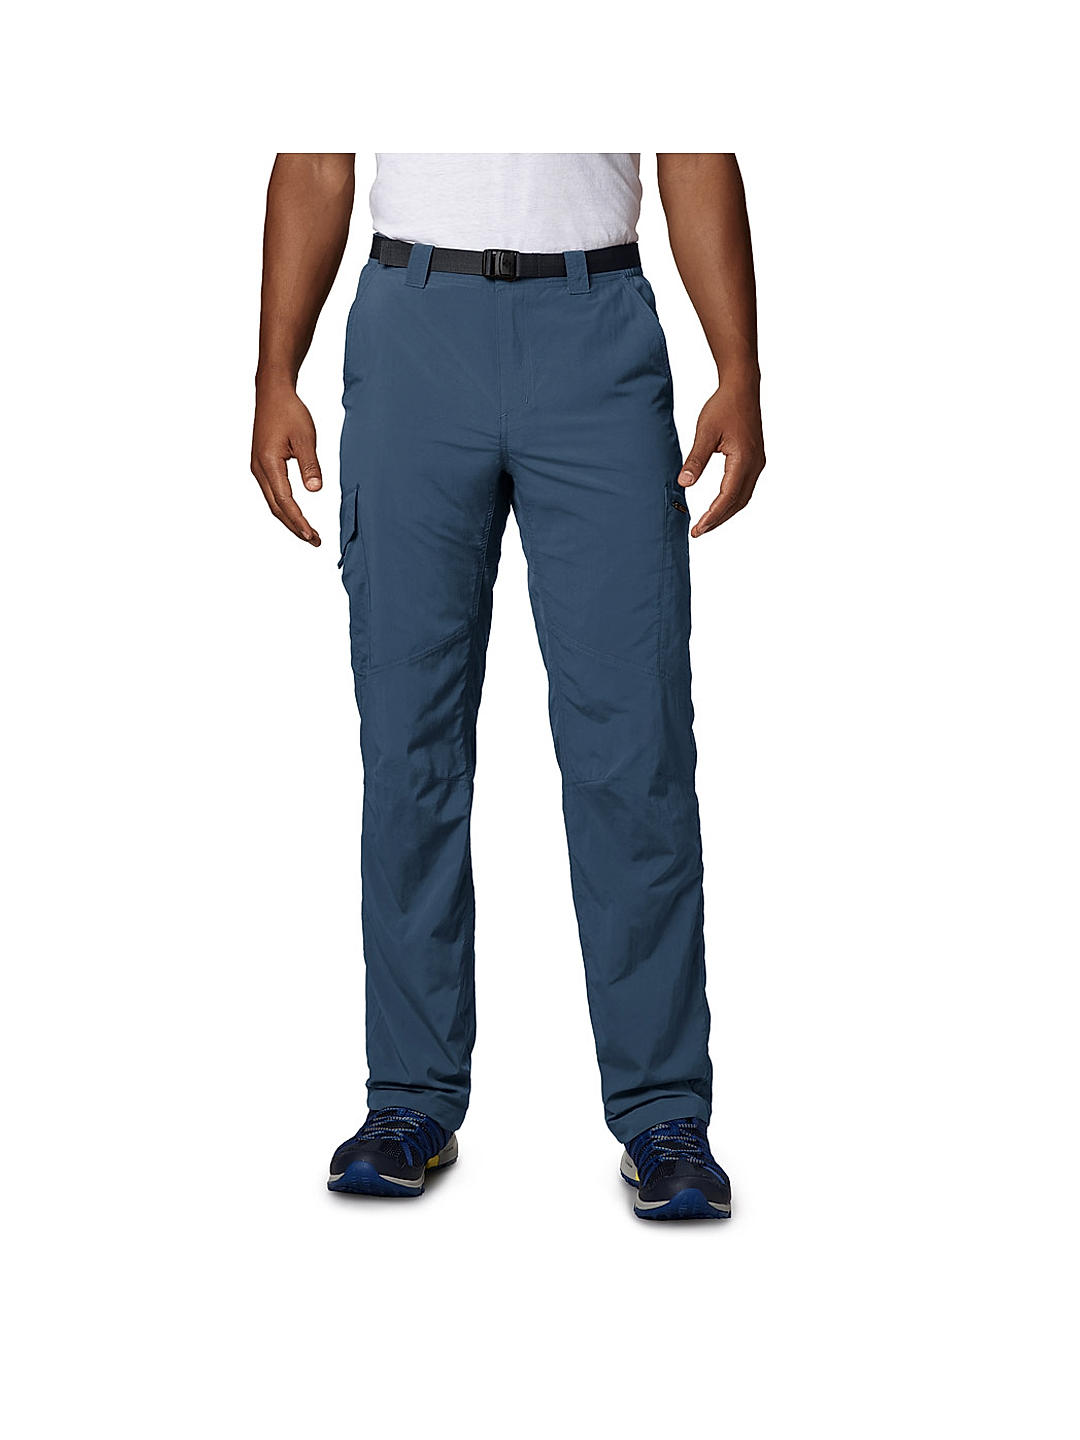 Buy White Silver Ridge Cargo Pant for Men Online at Columbia Sportswear   480138